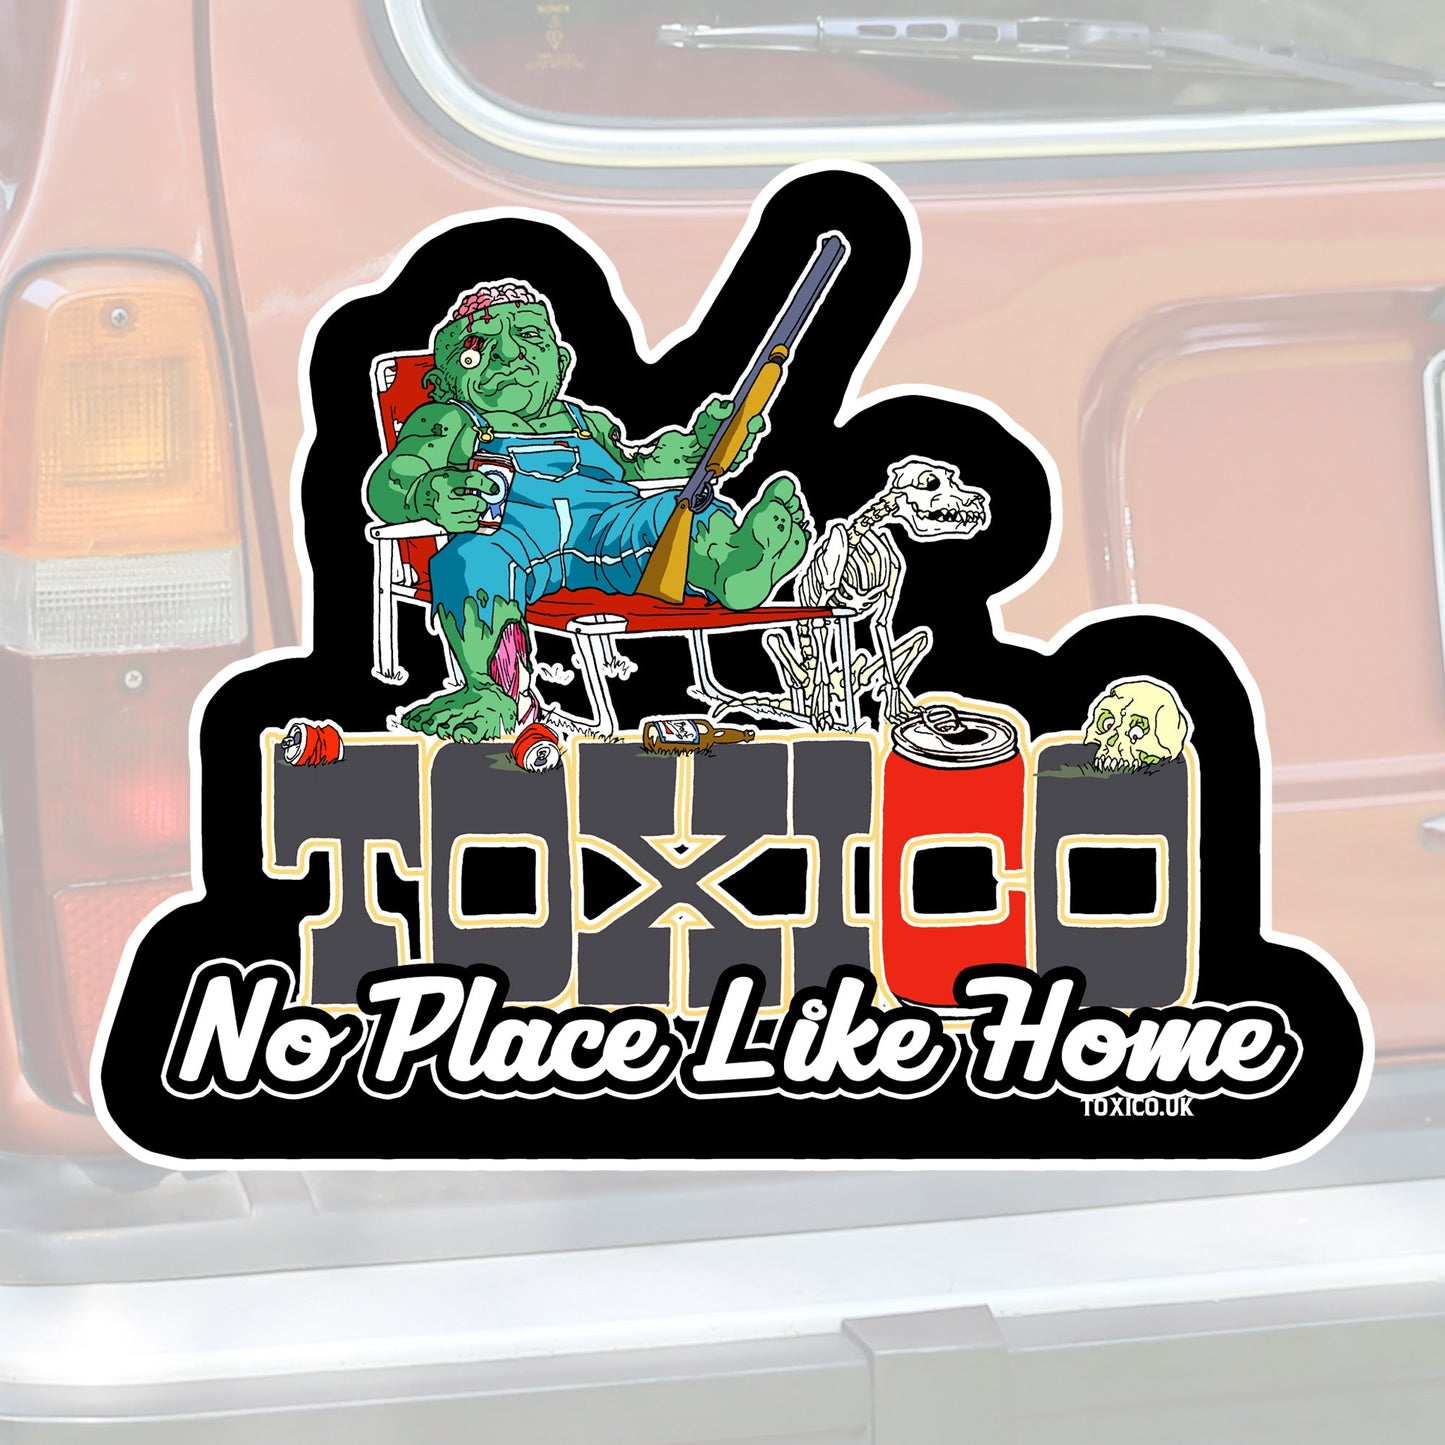 No Place Like Home Sticker